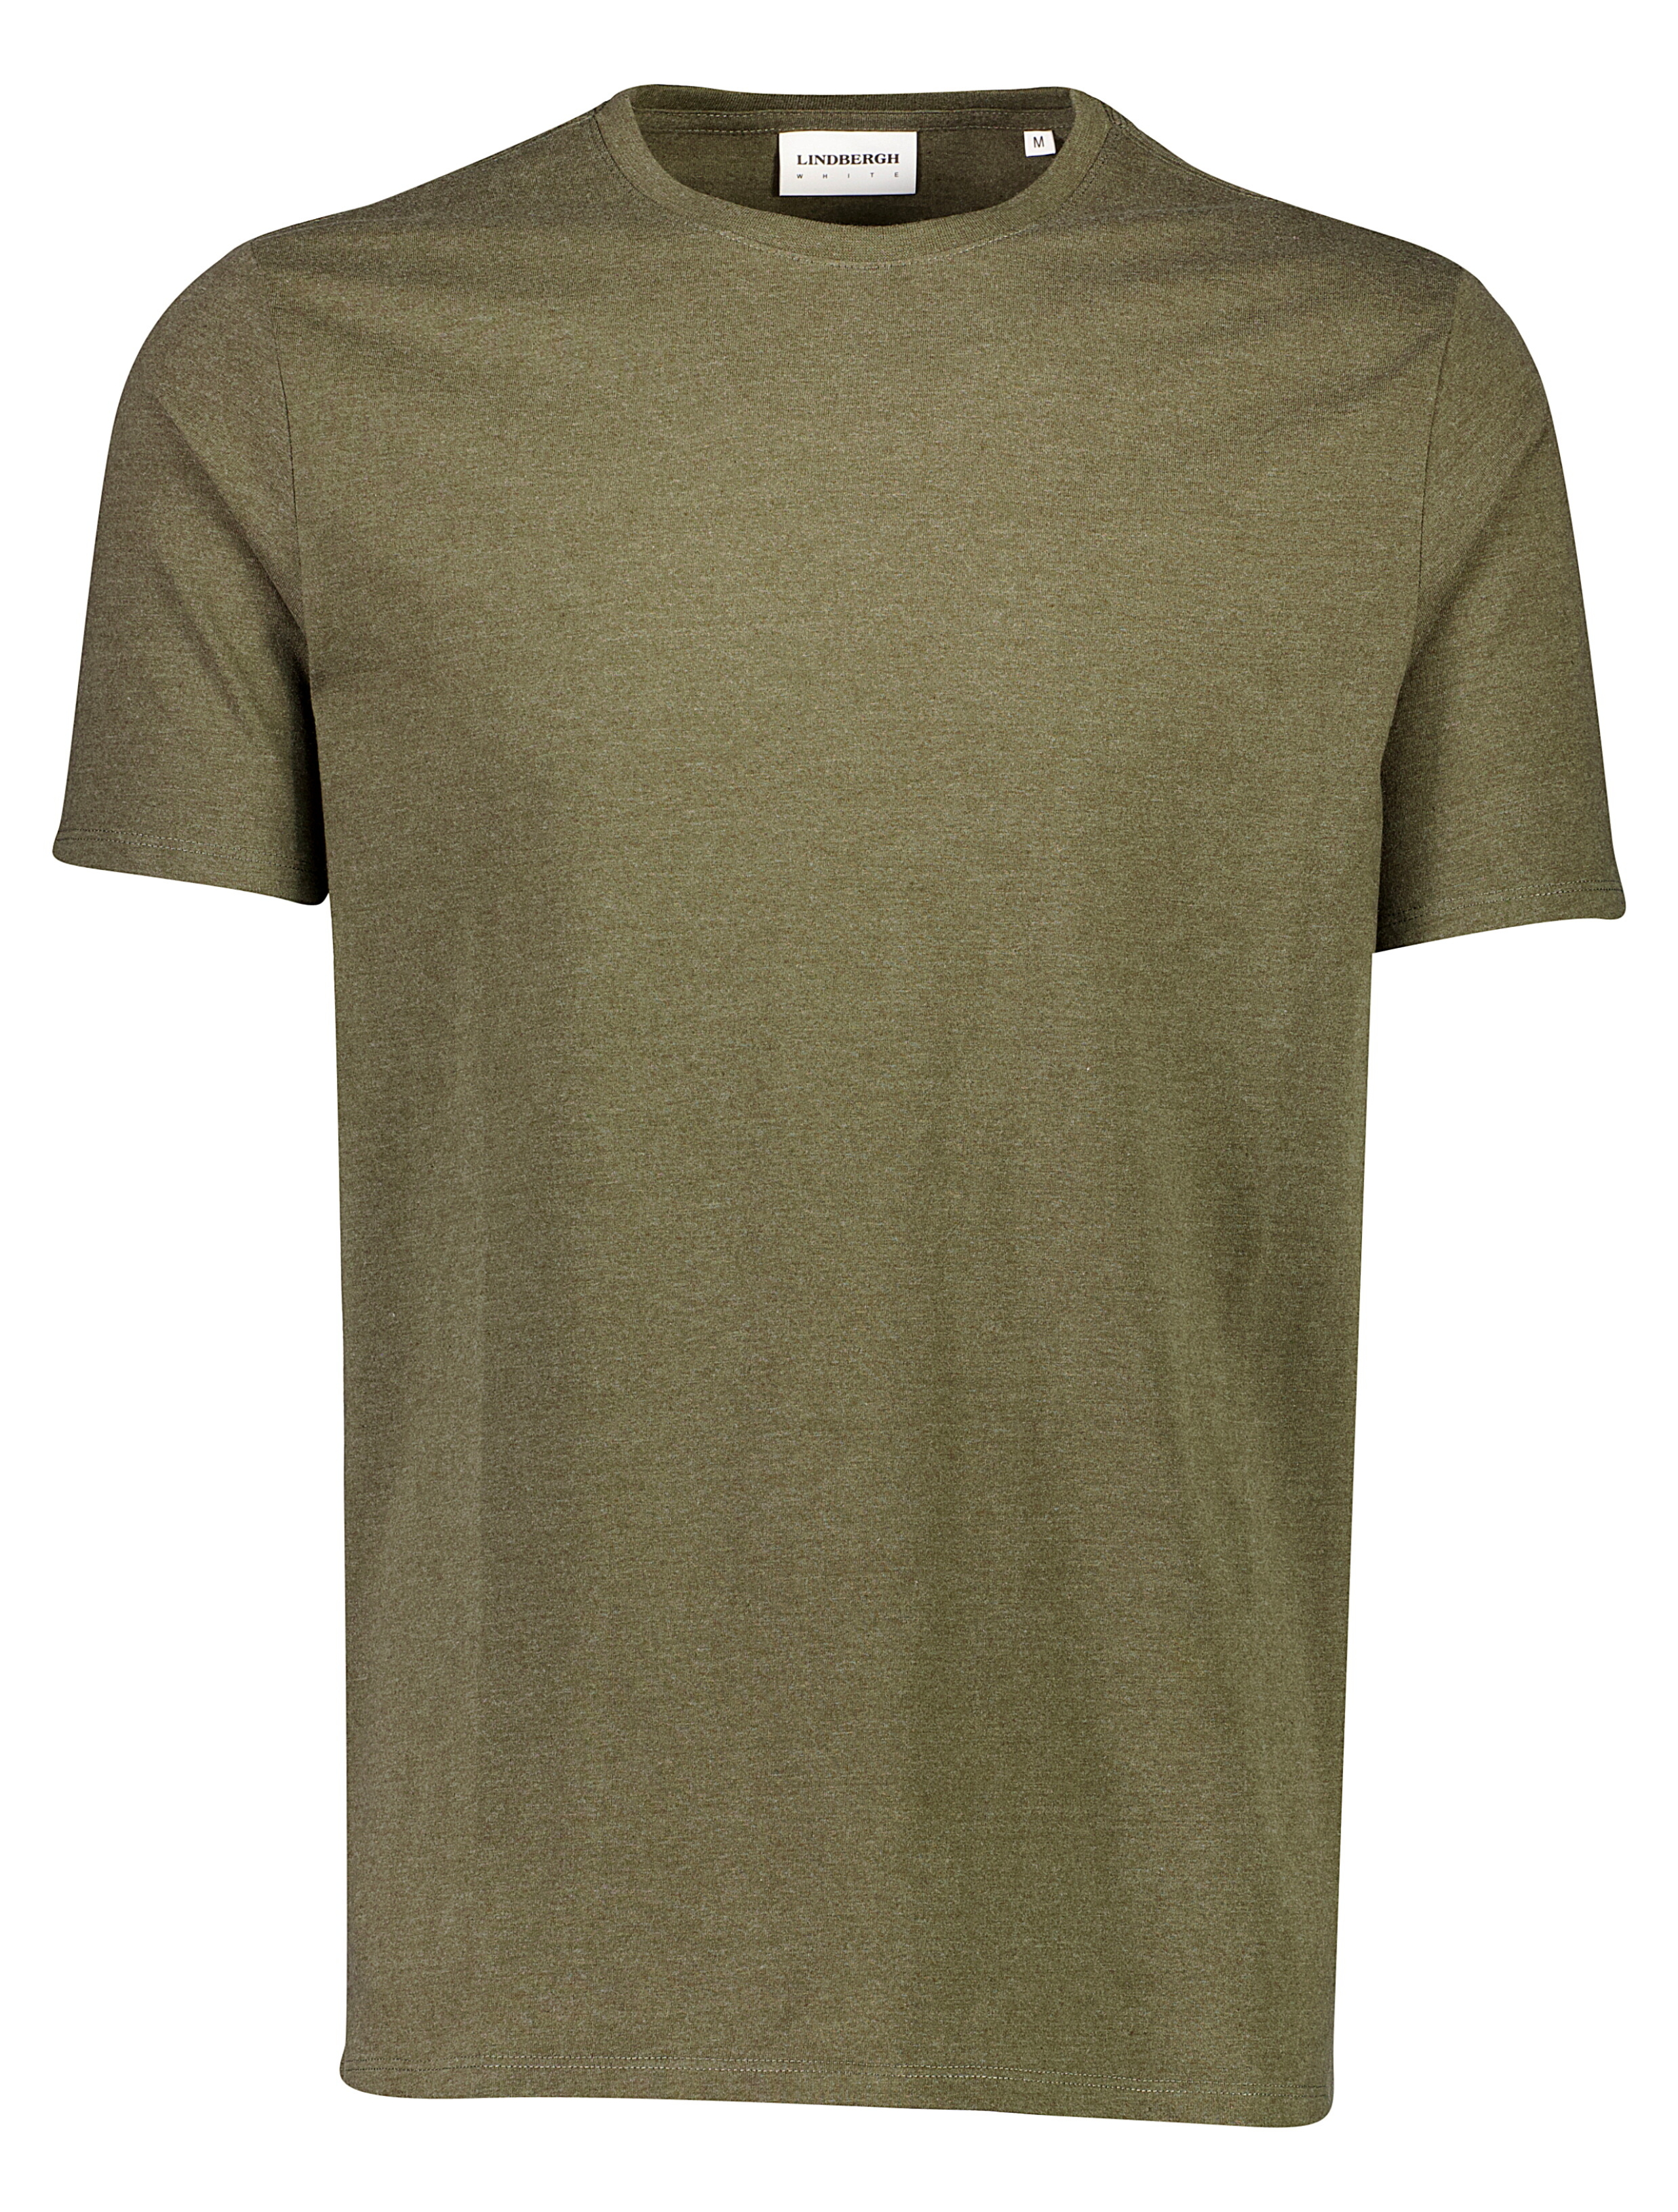 Lindbergh T-shirt grön / army mel